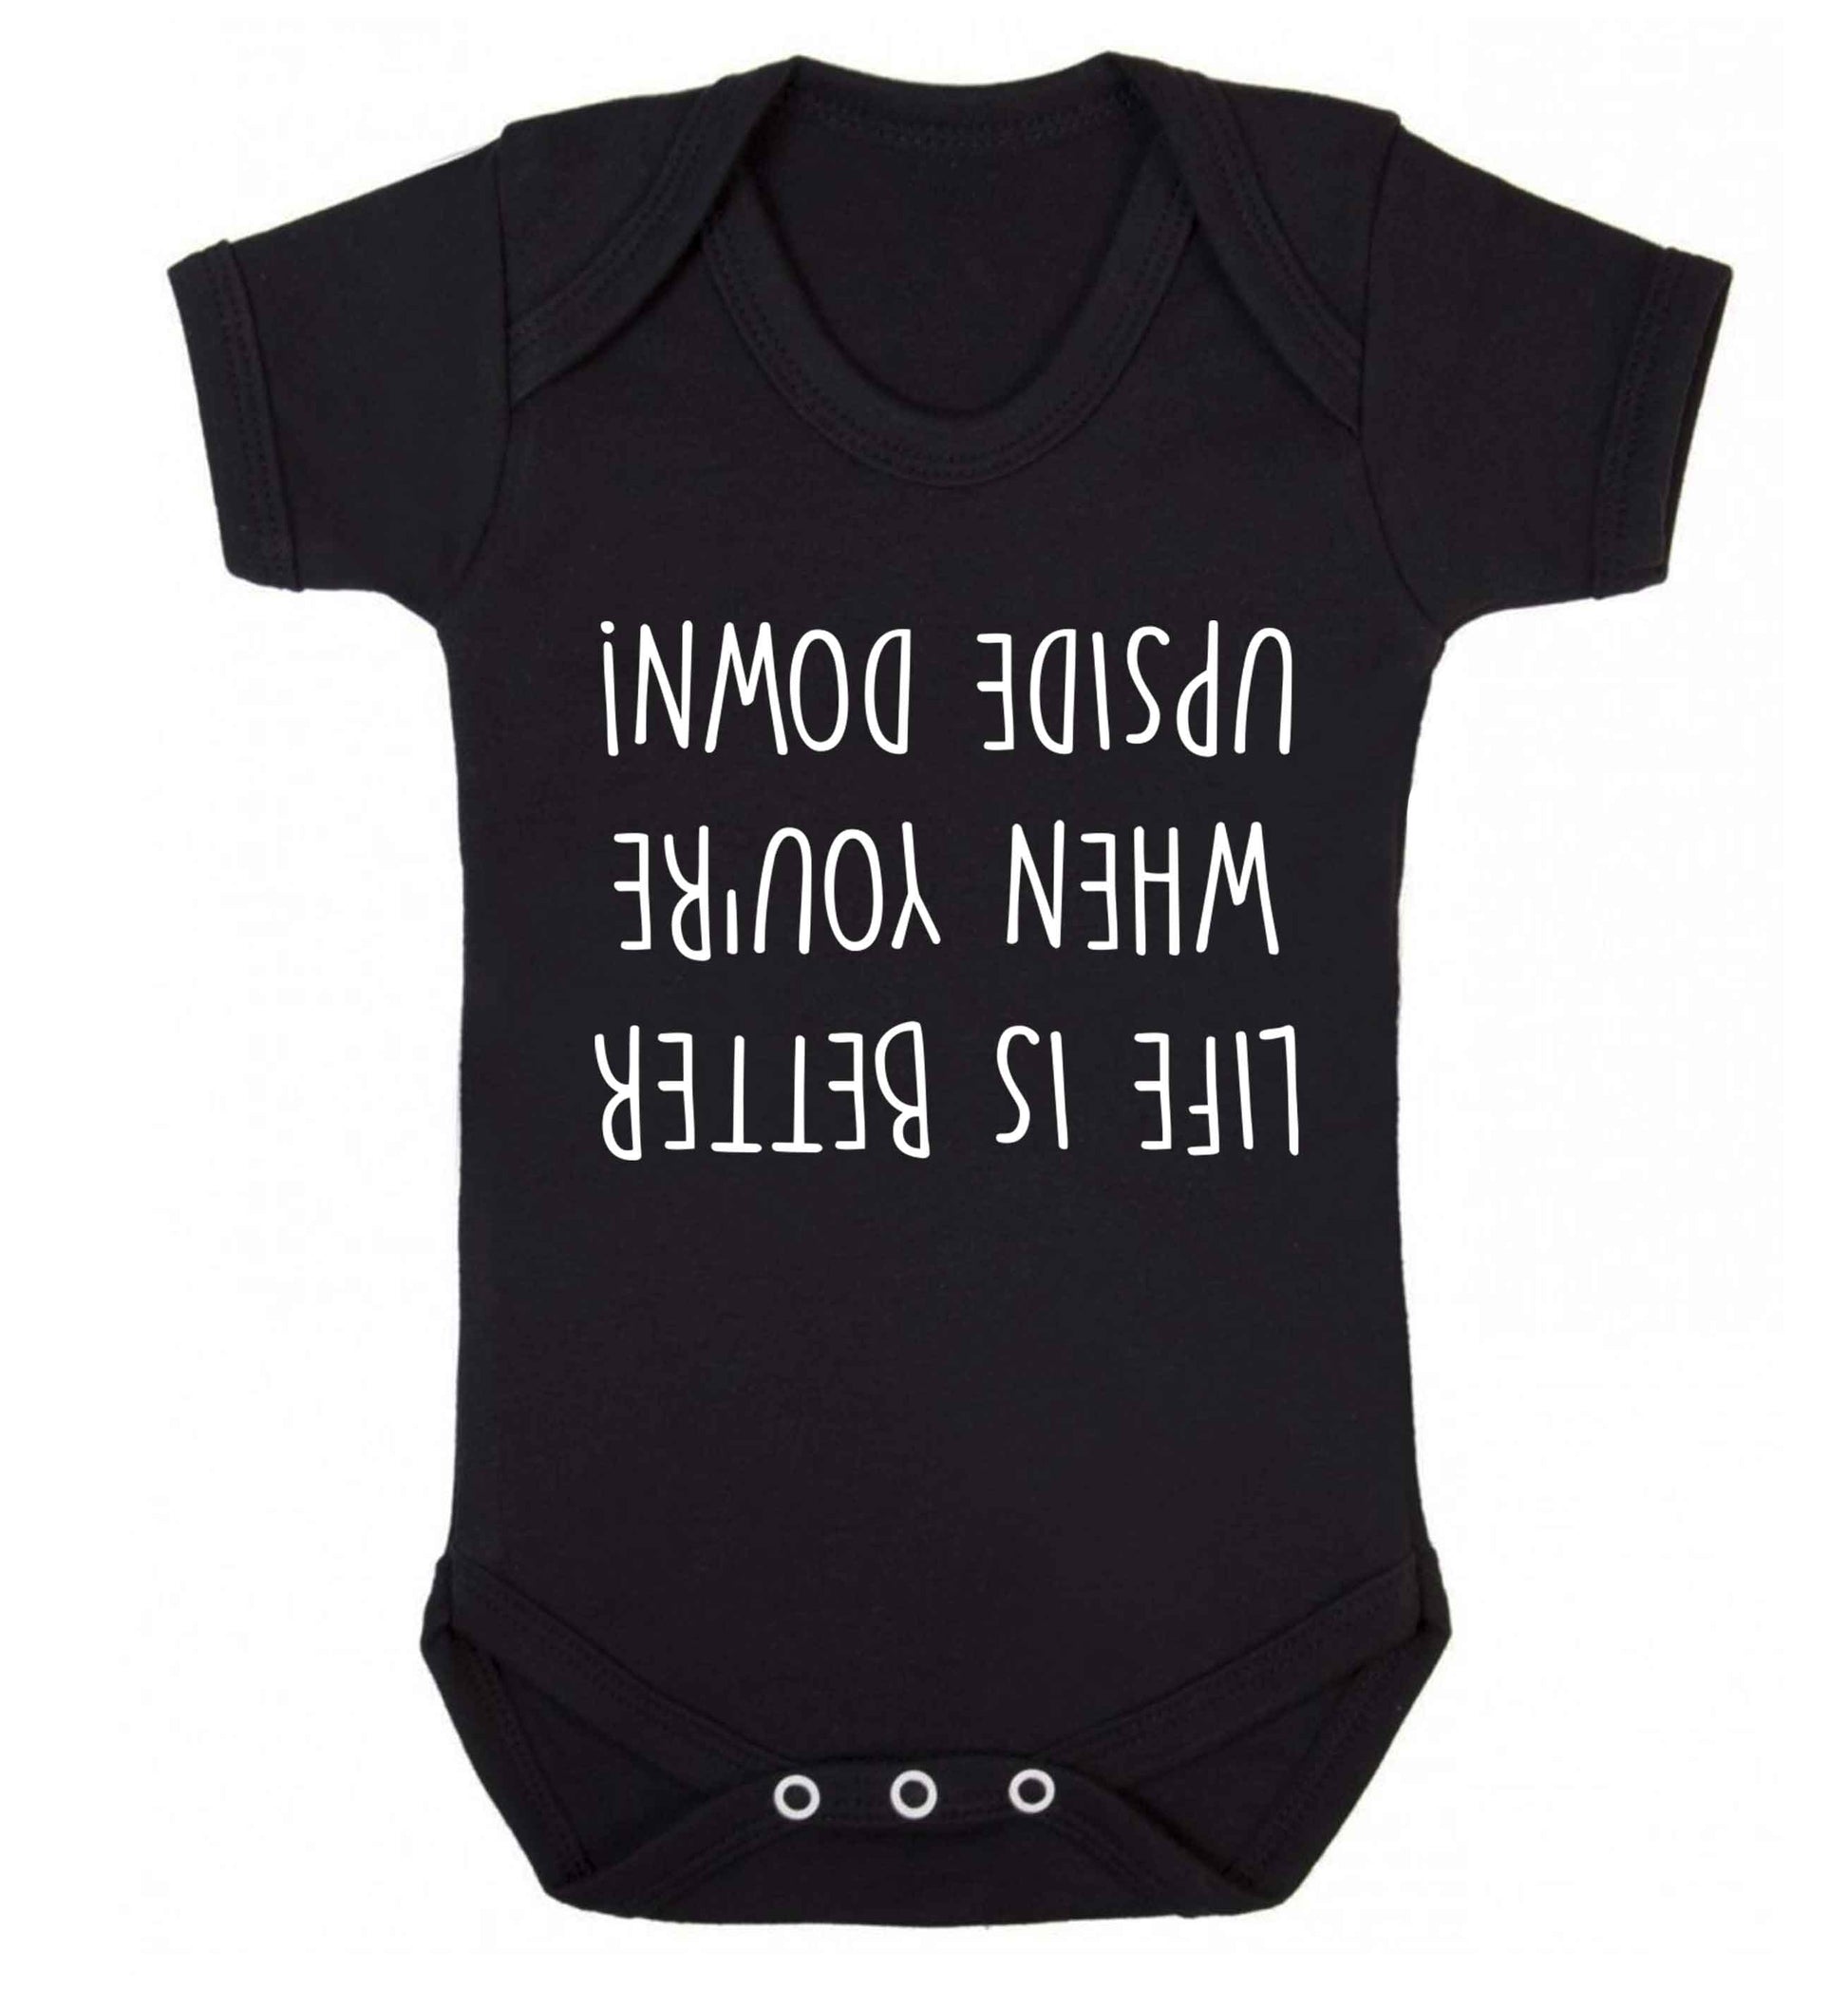 Life is better upside down Baby Vest black 18-24 months